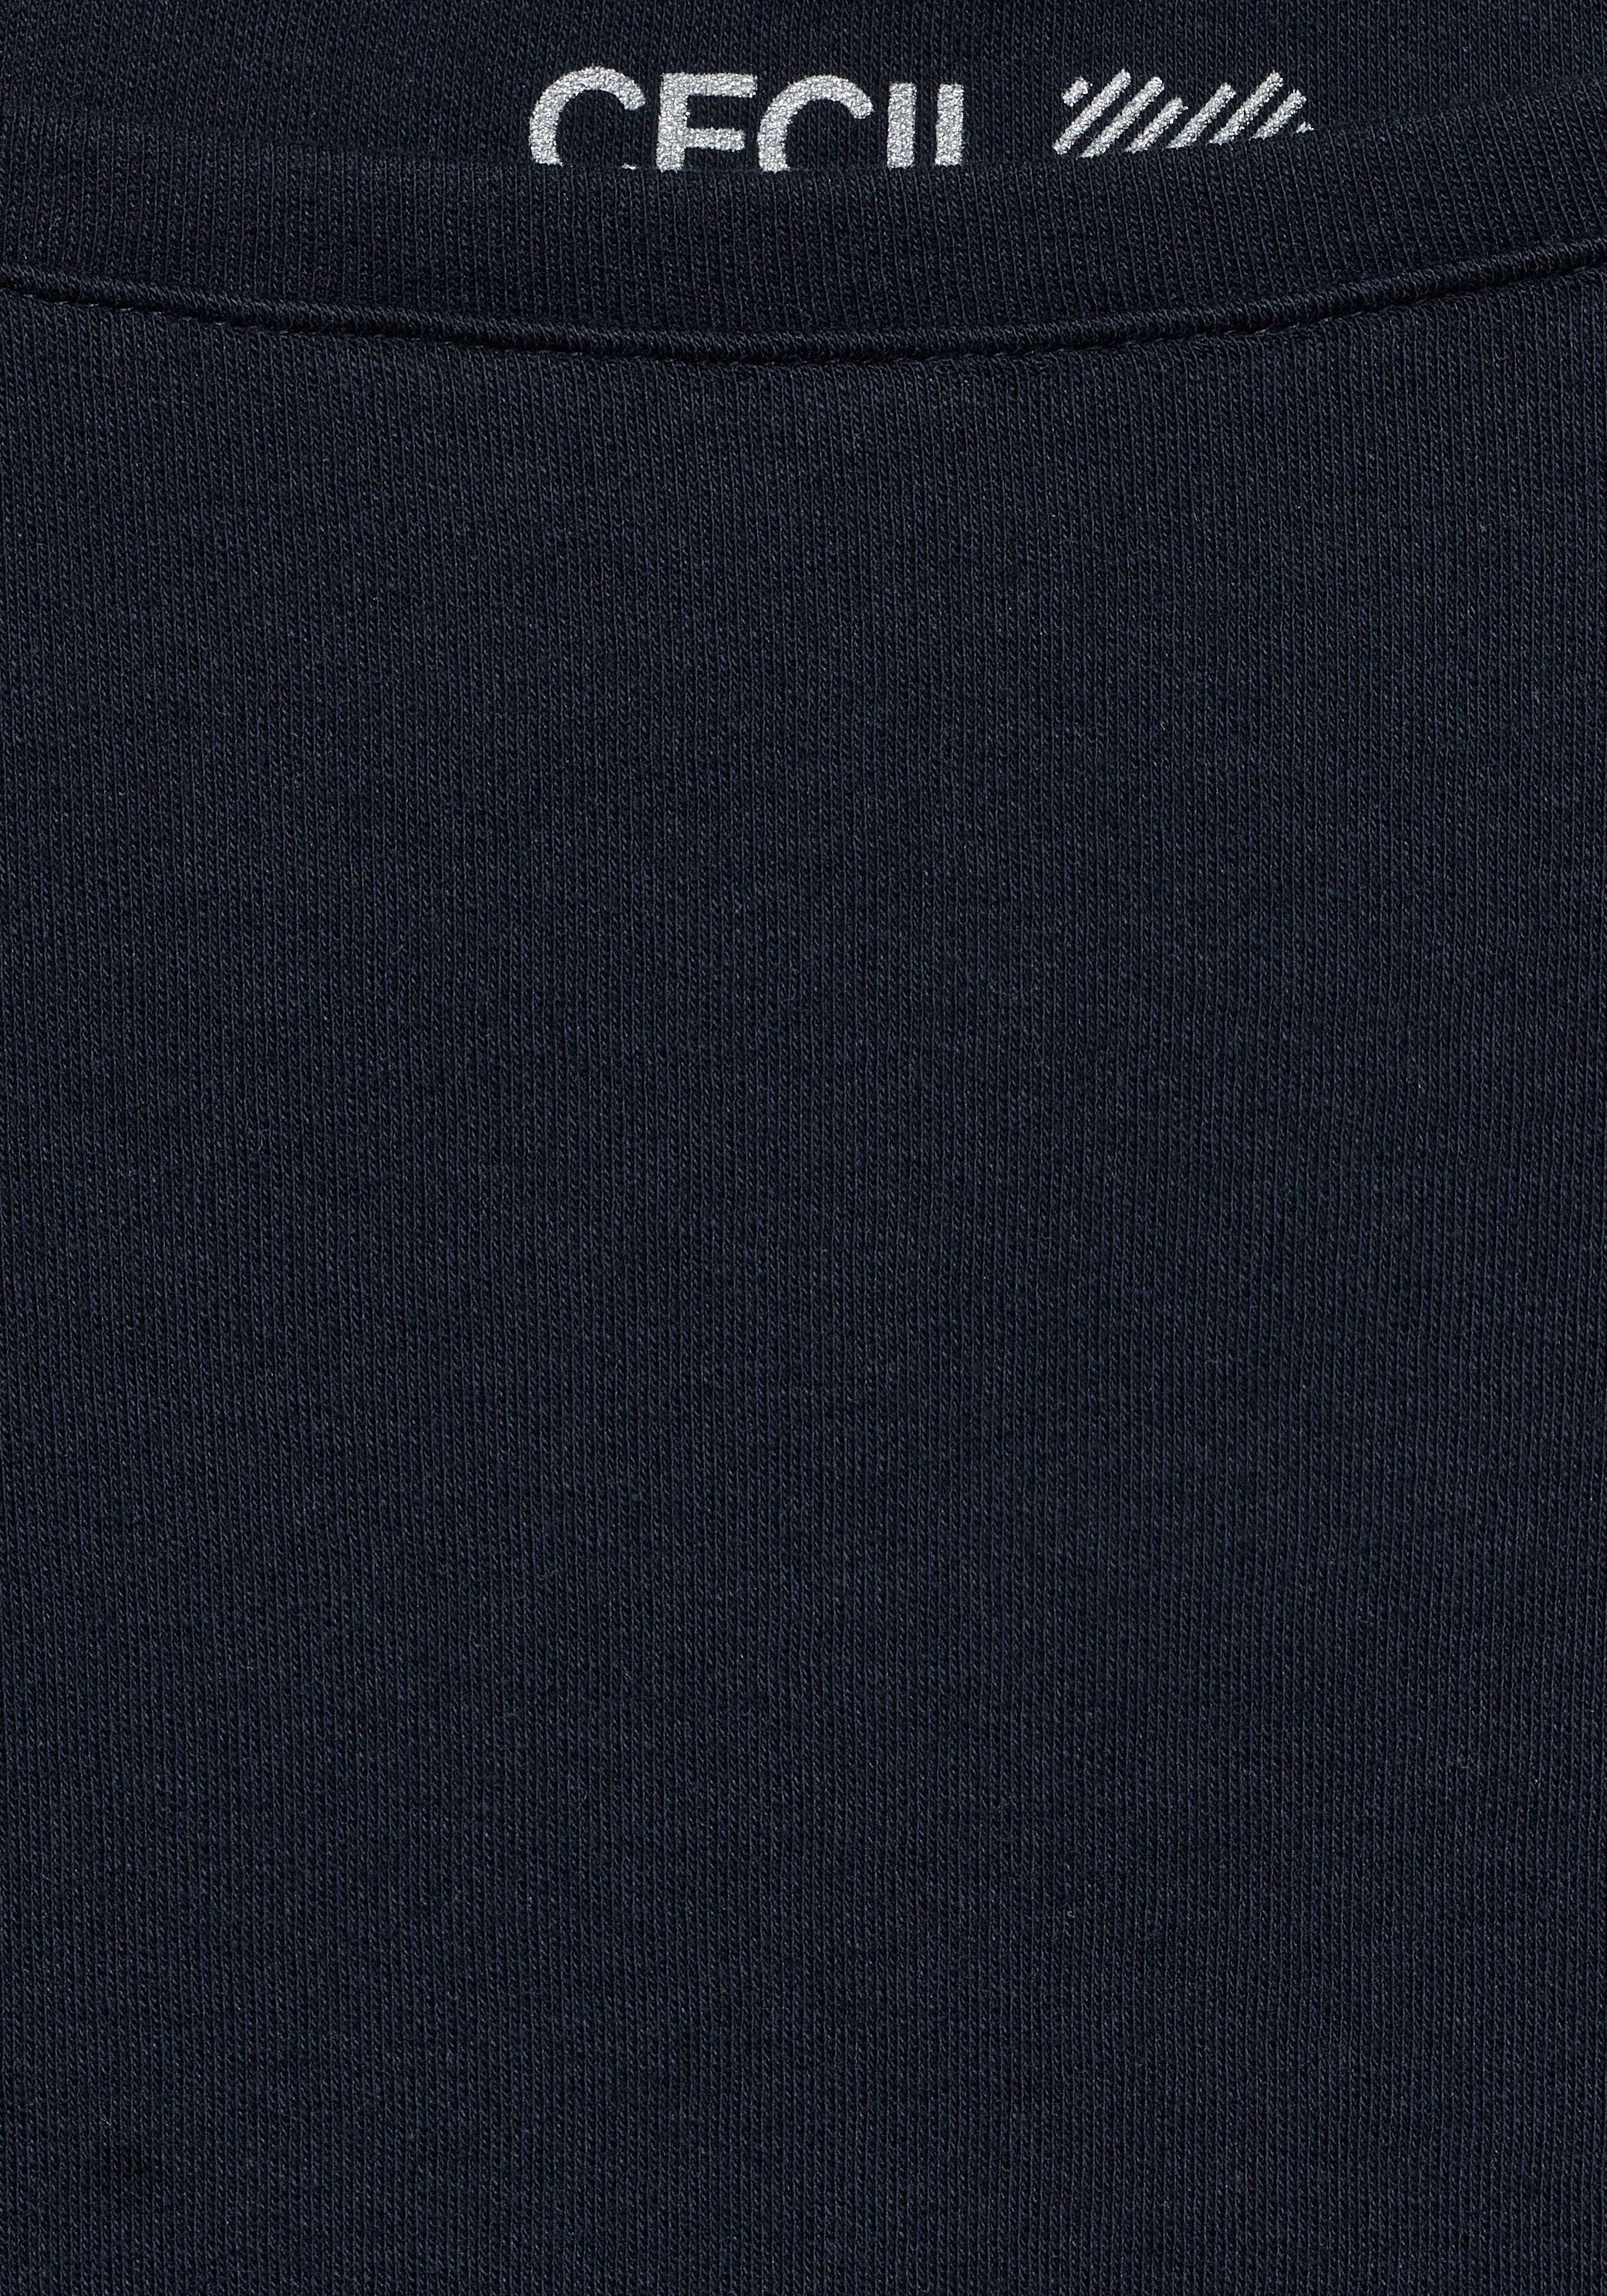 klassischem U-Boot-Ausschnitt blue 3/4-Arm-Shirt deep mit Cecil